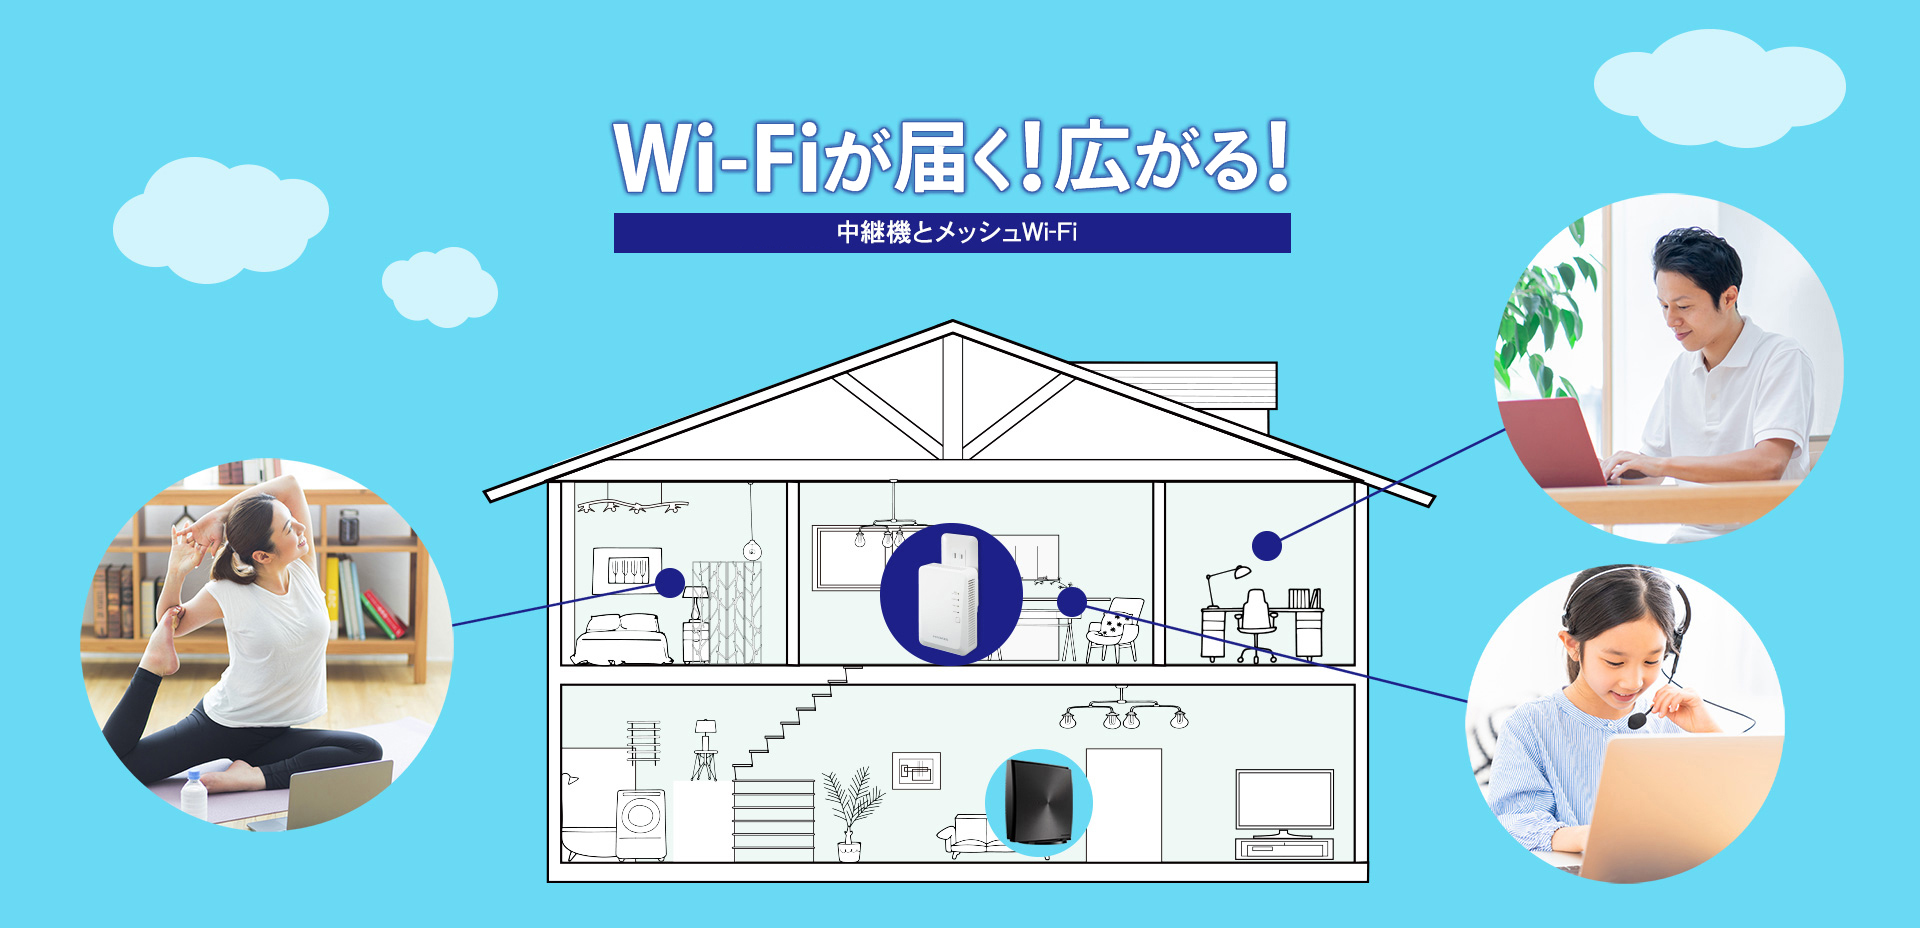 Wi-Fi電波の中継機